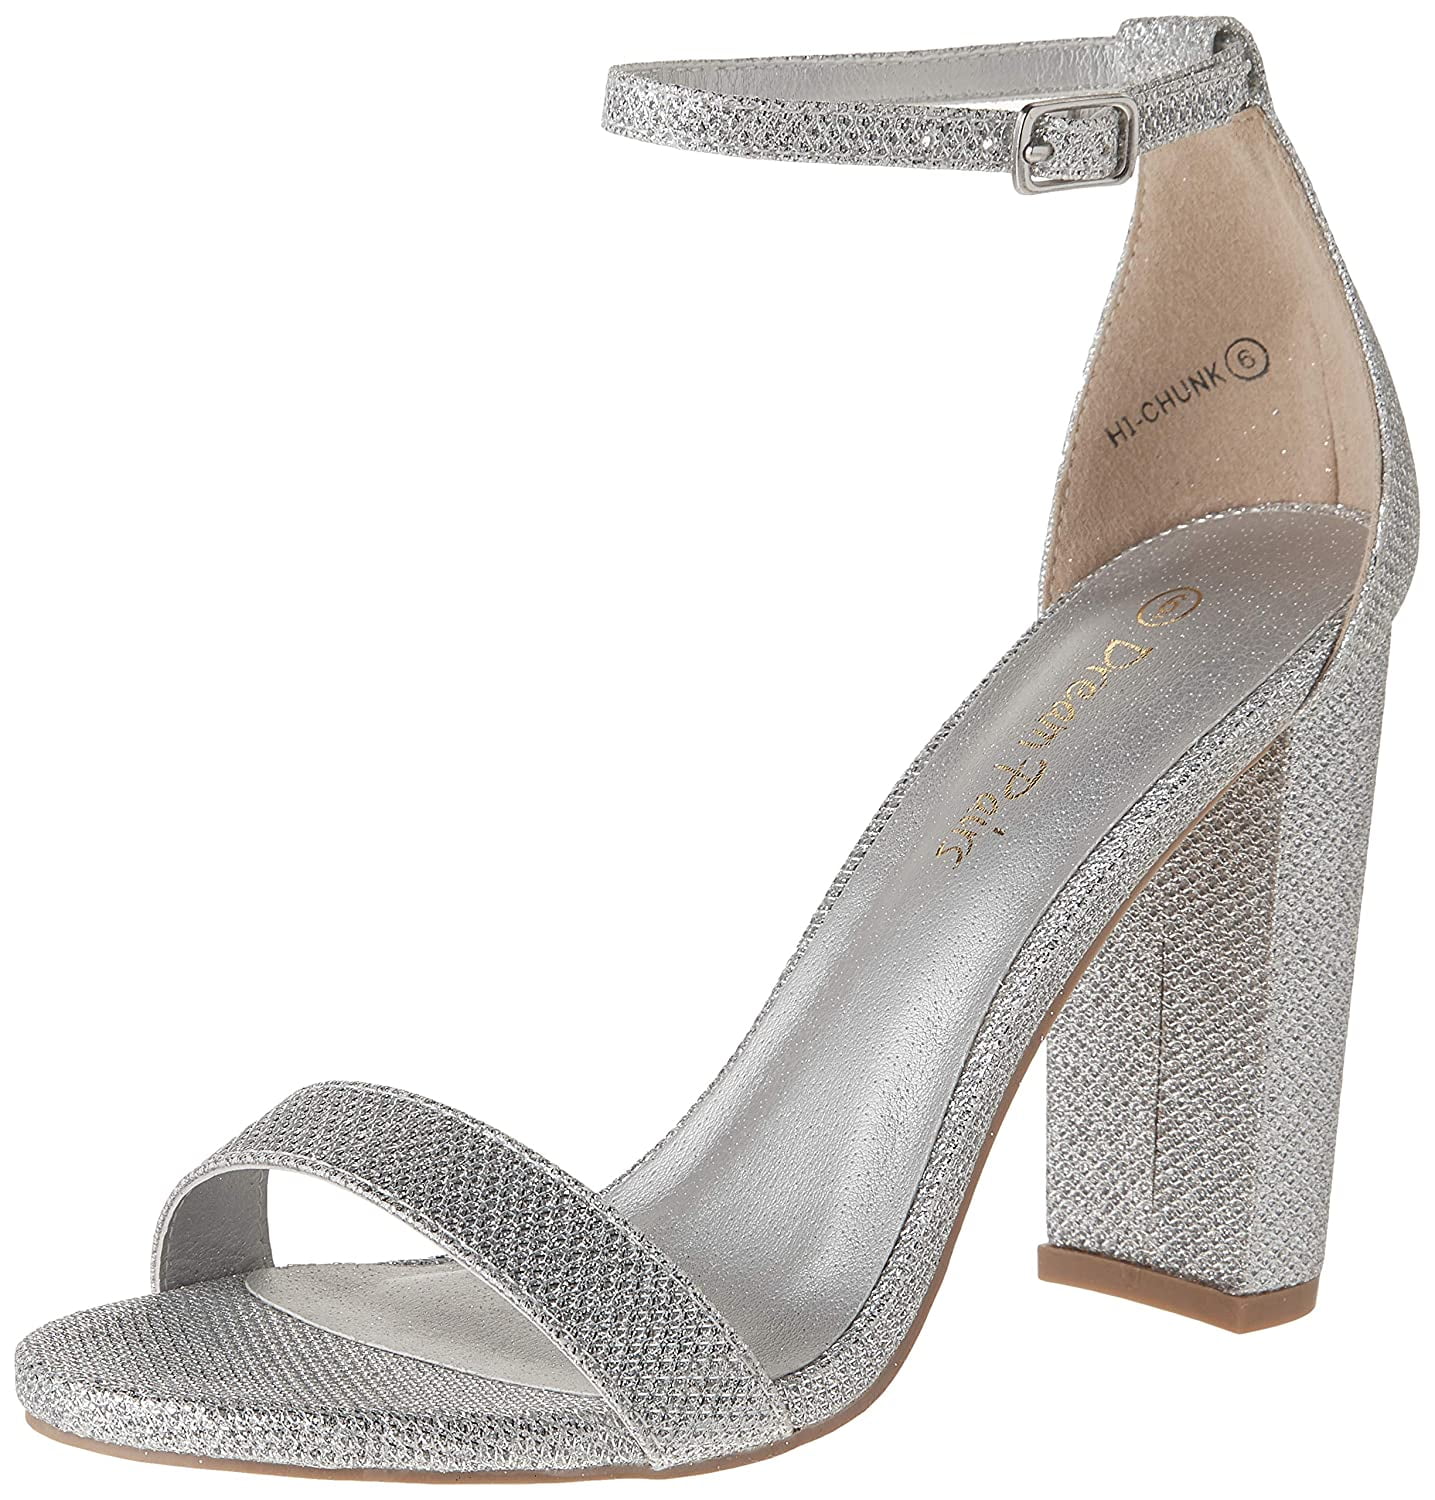 Metallic New Look Glitter Strappy Stiletto Heel Sandals Vegan in Silver Womens Shoes Heels Sandal heels 